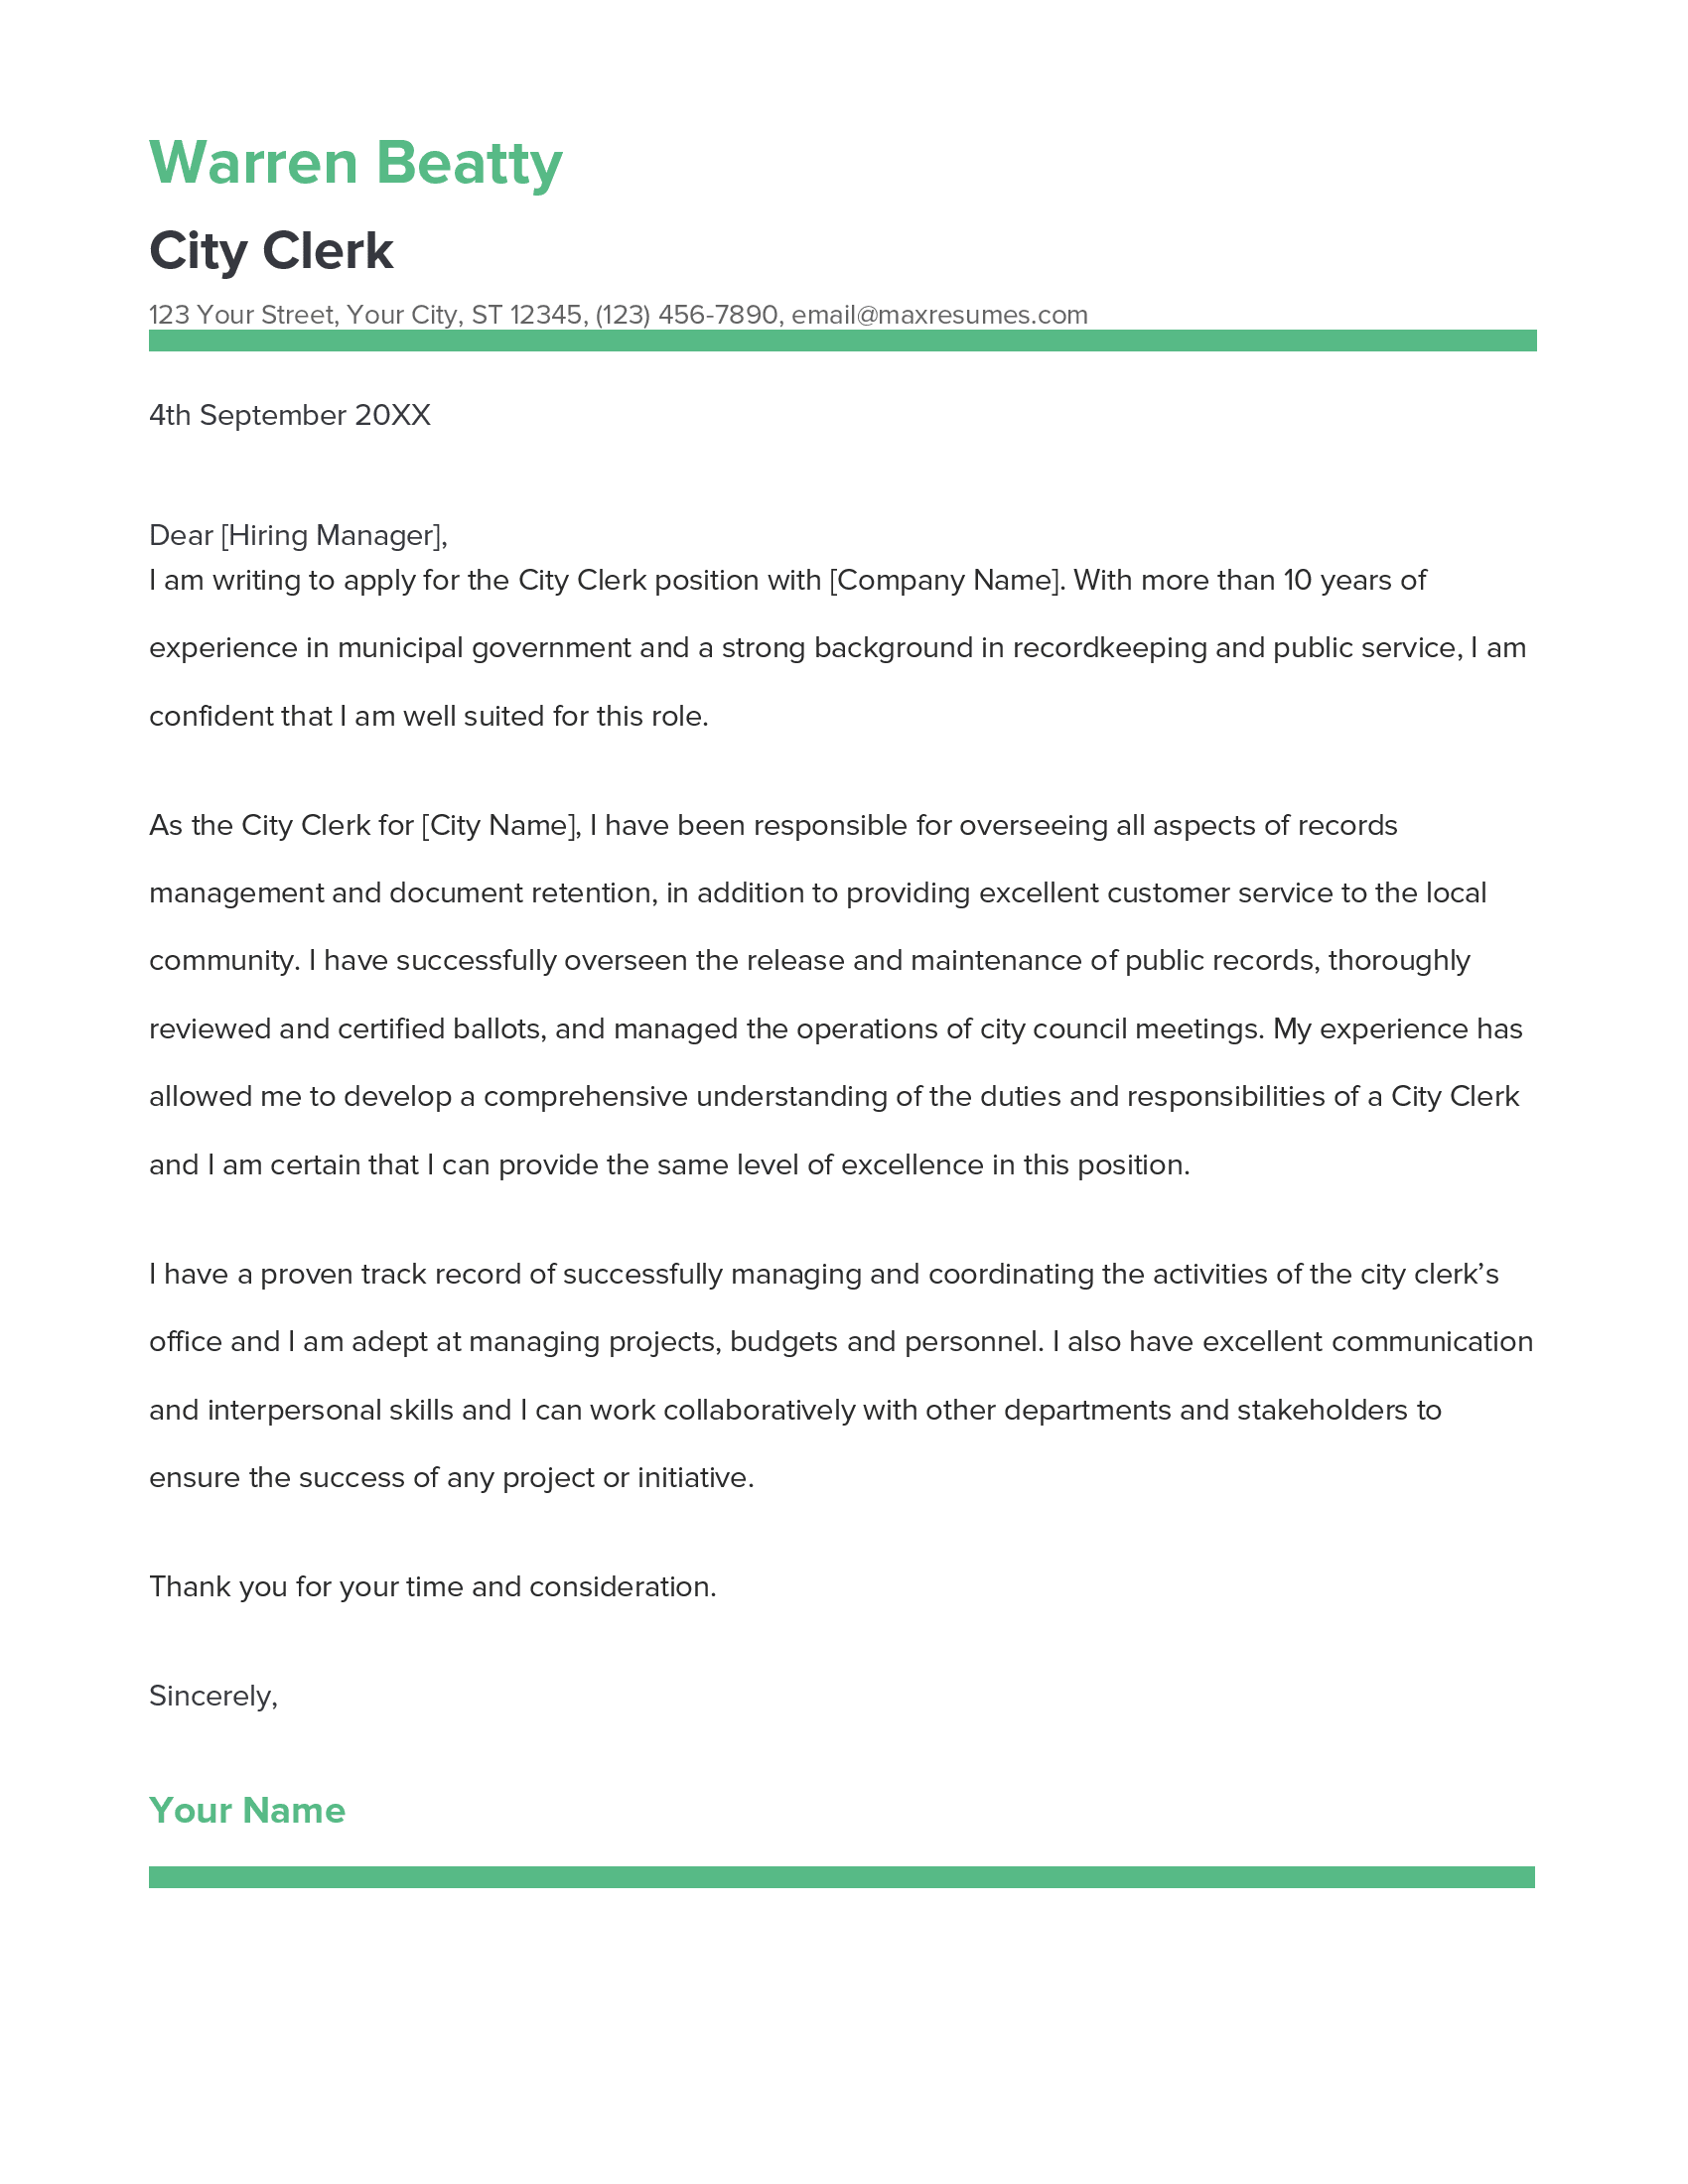 City Clerk Cover Letter Example